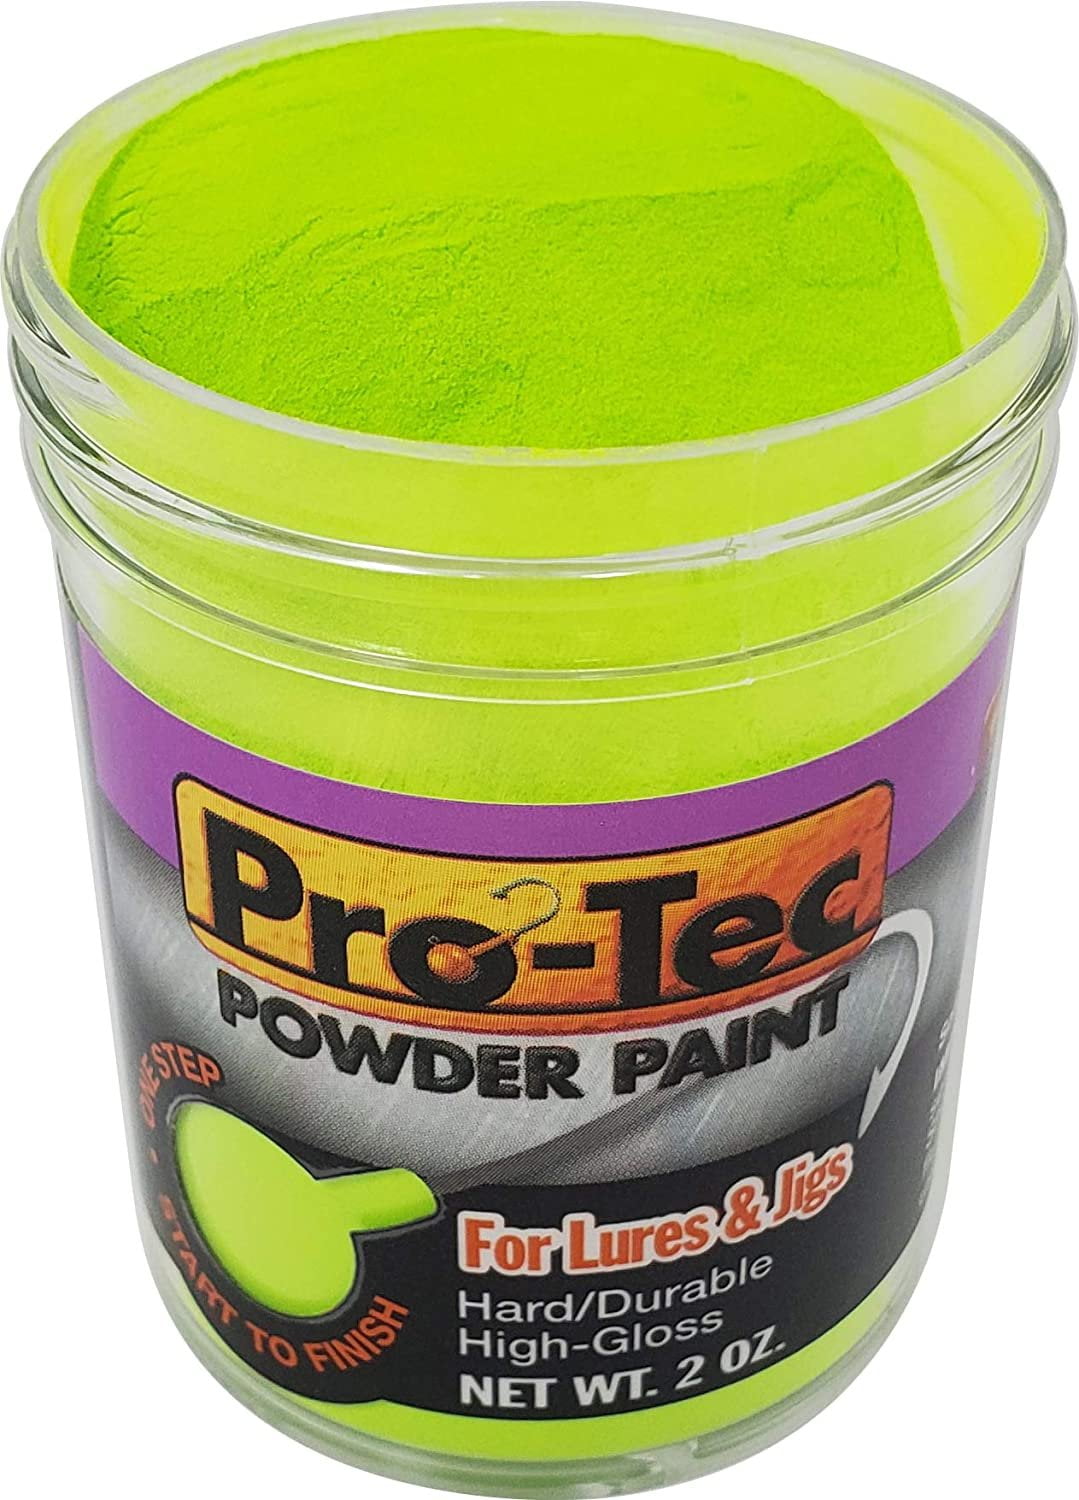 Pro-Tec Jigs and Lures Powder Paints, Jig Head Ghana